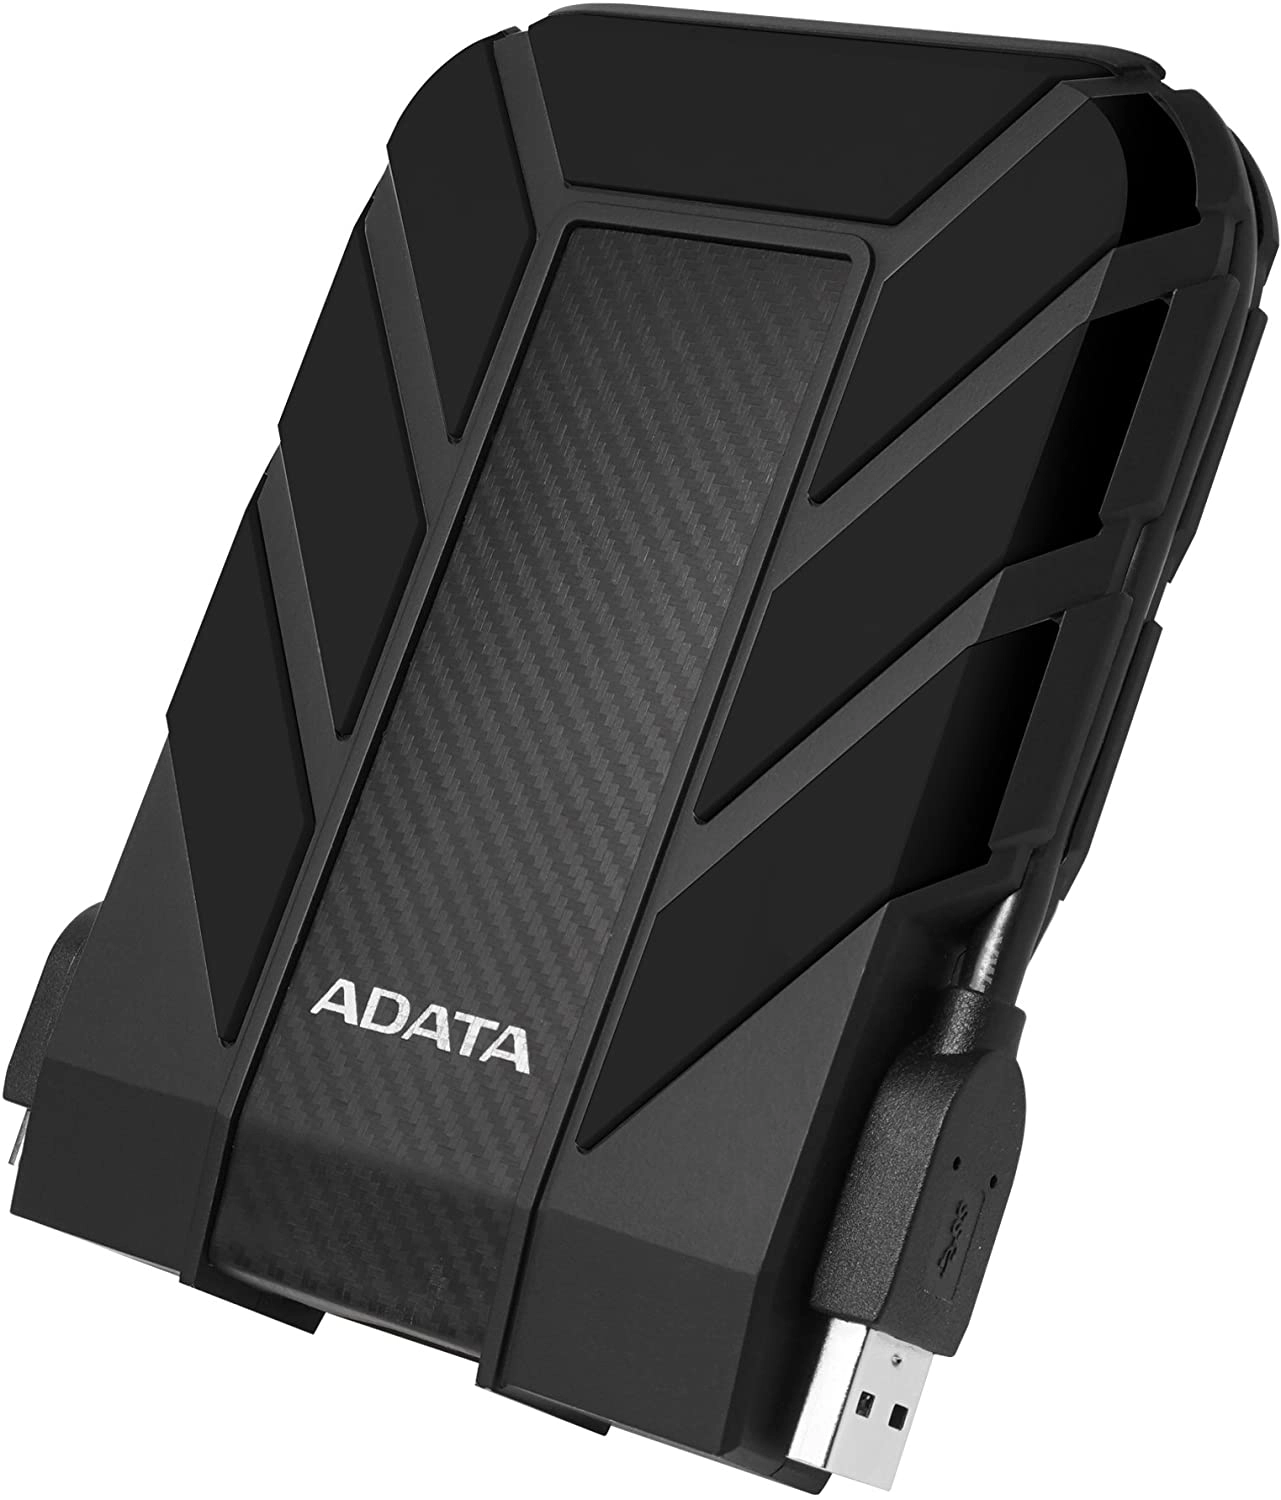 Внешний HDD диск ADATA DashDrive HD710P 2TB Black (AHD710P-2TU31-CBK)